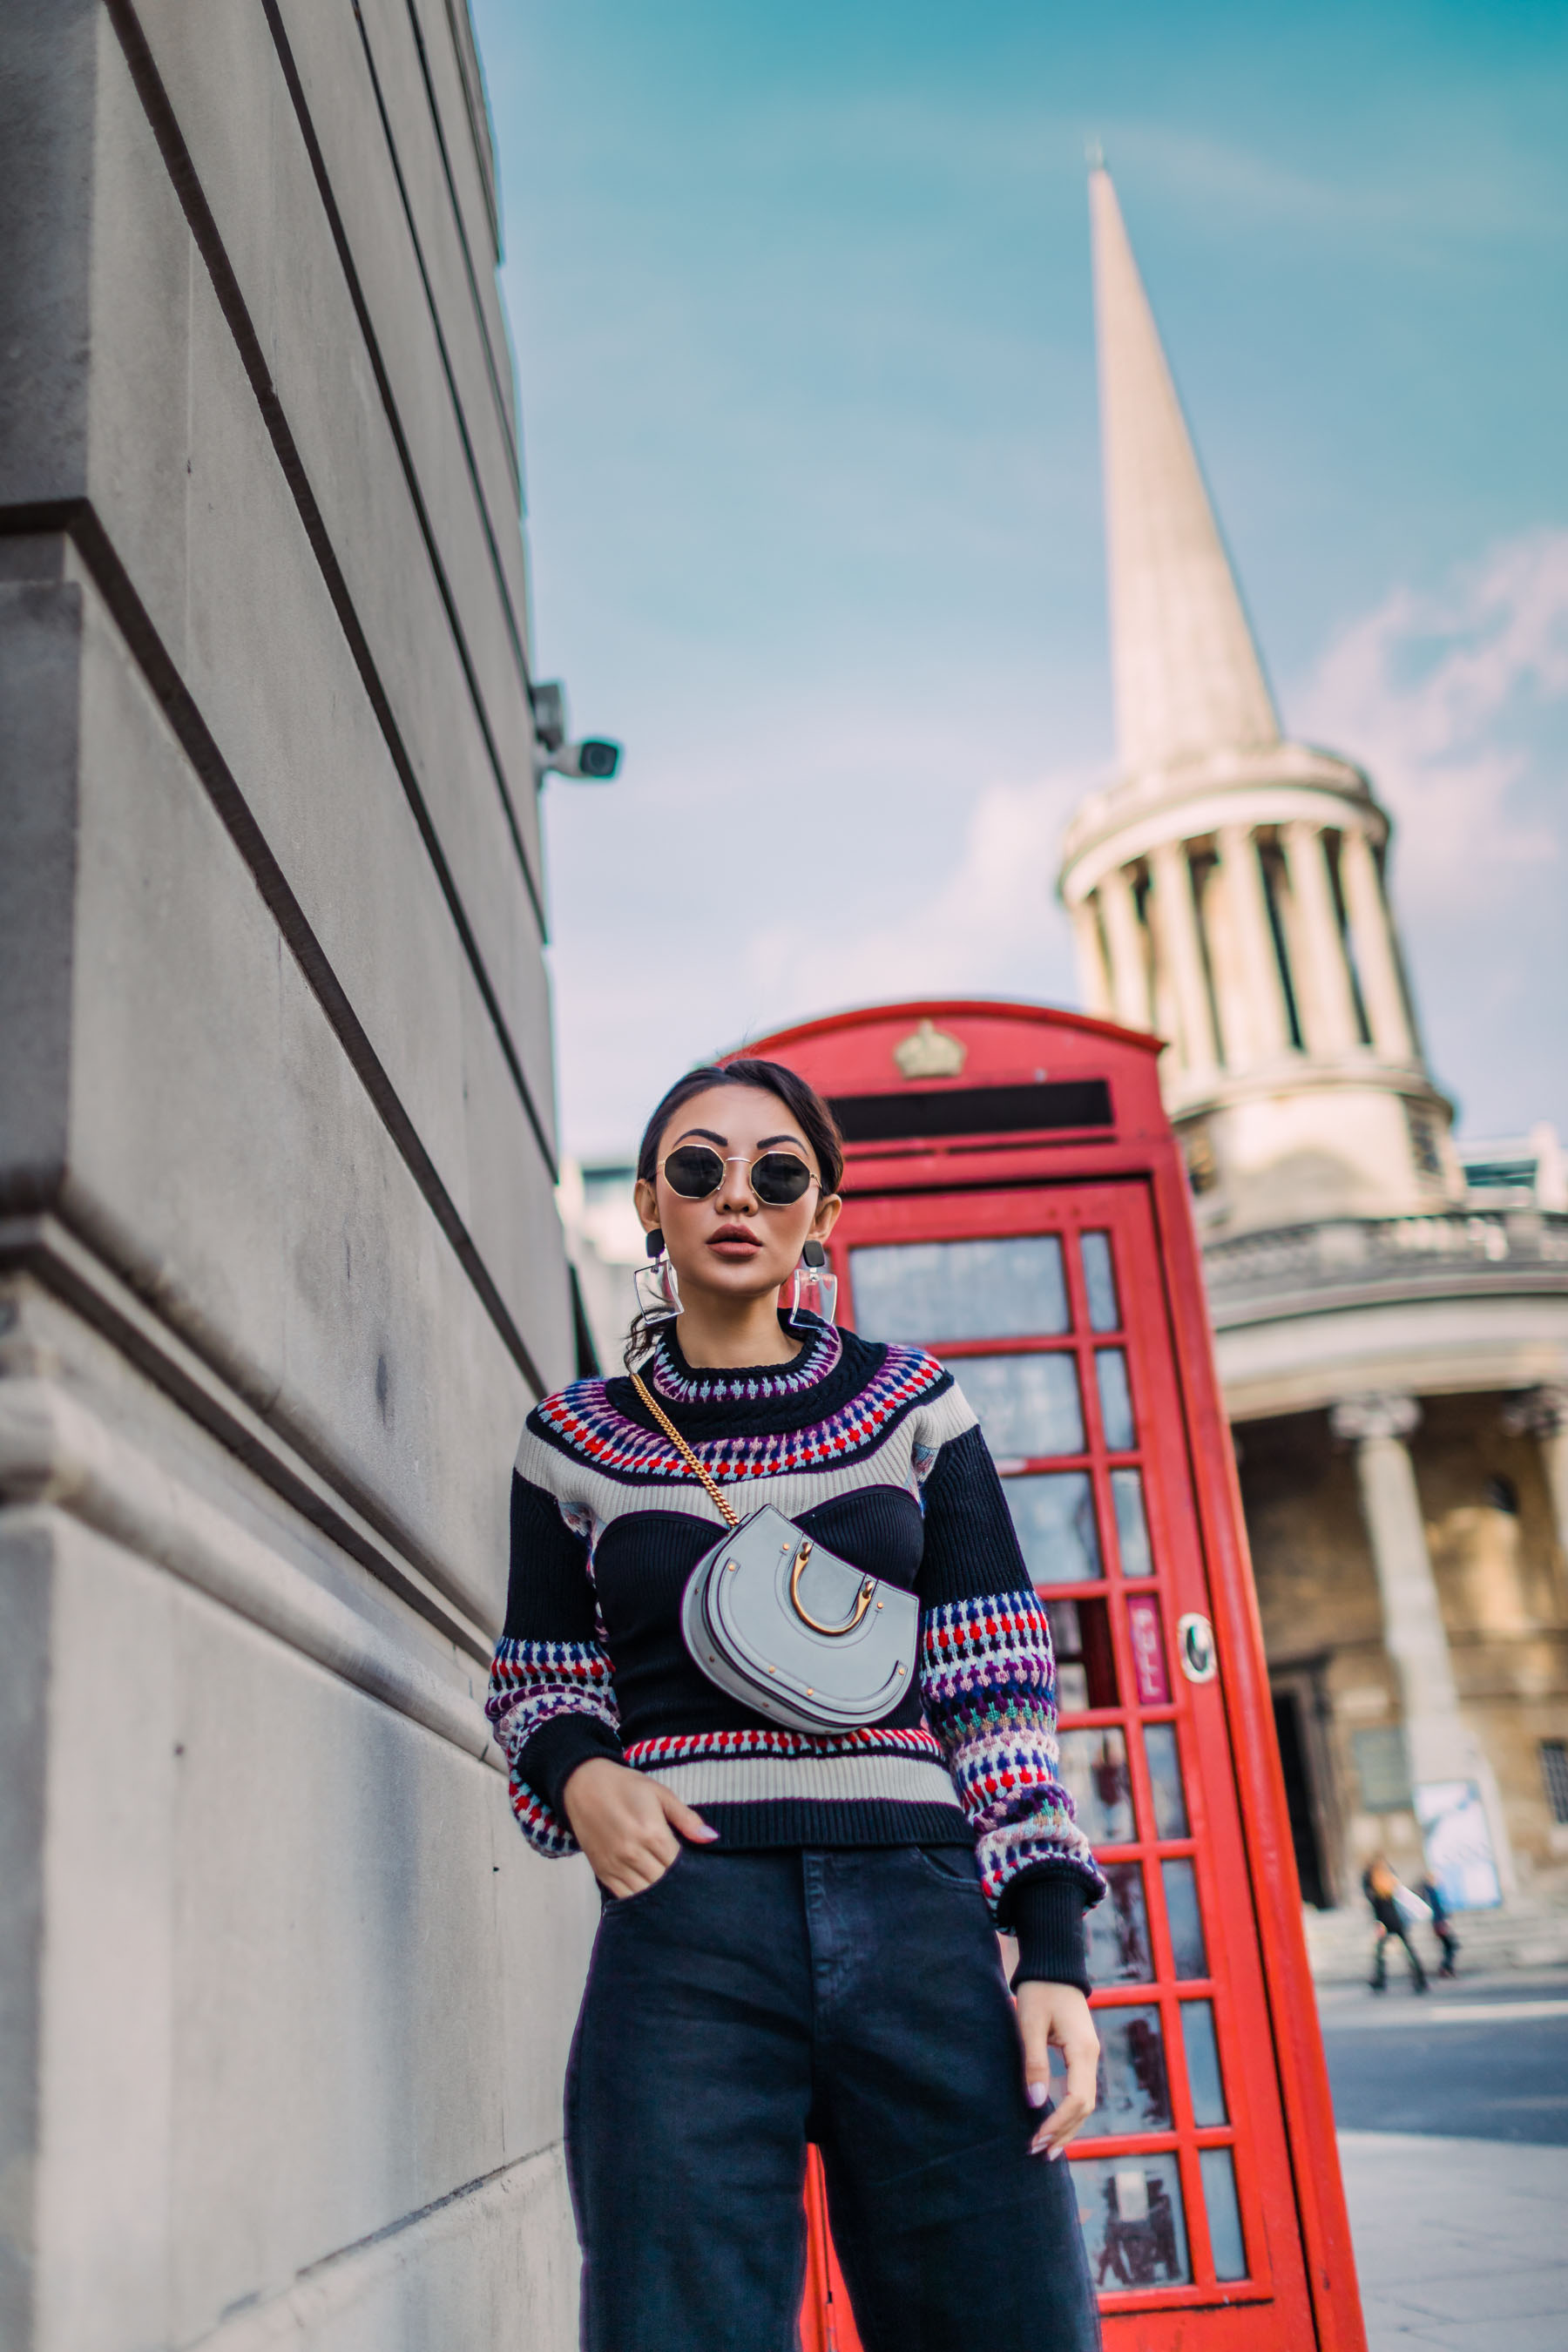 London Fashion Week Highlights - Burberry Sweater, Chloe Bag, fanny pack, LFW Street Style, London Fashion Week Outfits // Notjessfashion.com